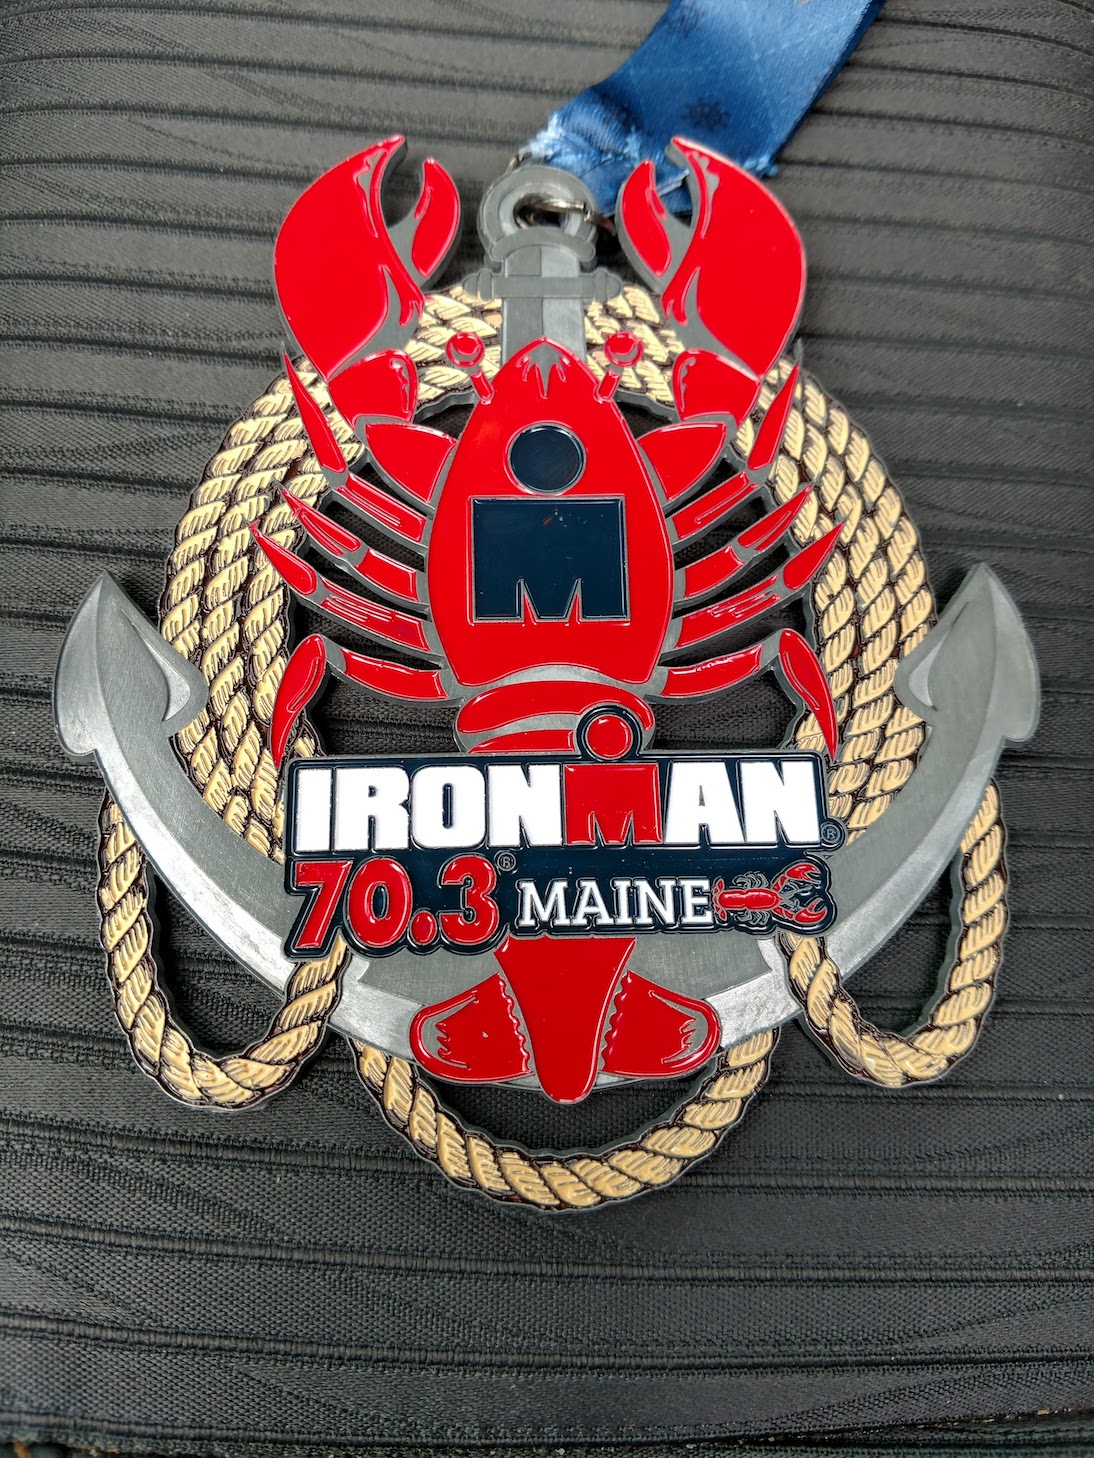 2017 Ironman Maine 70.3 Race Report